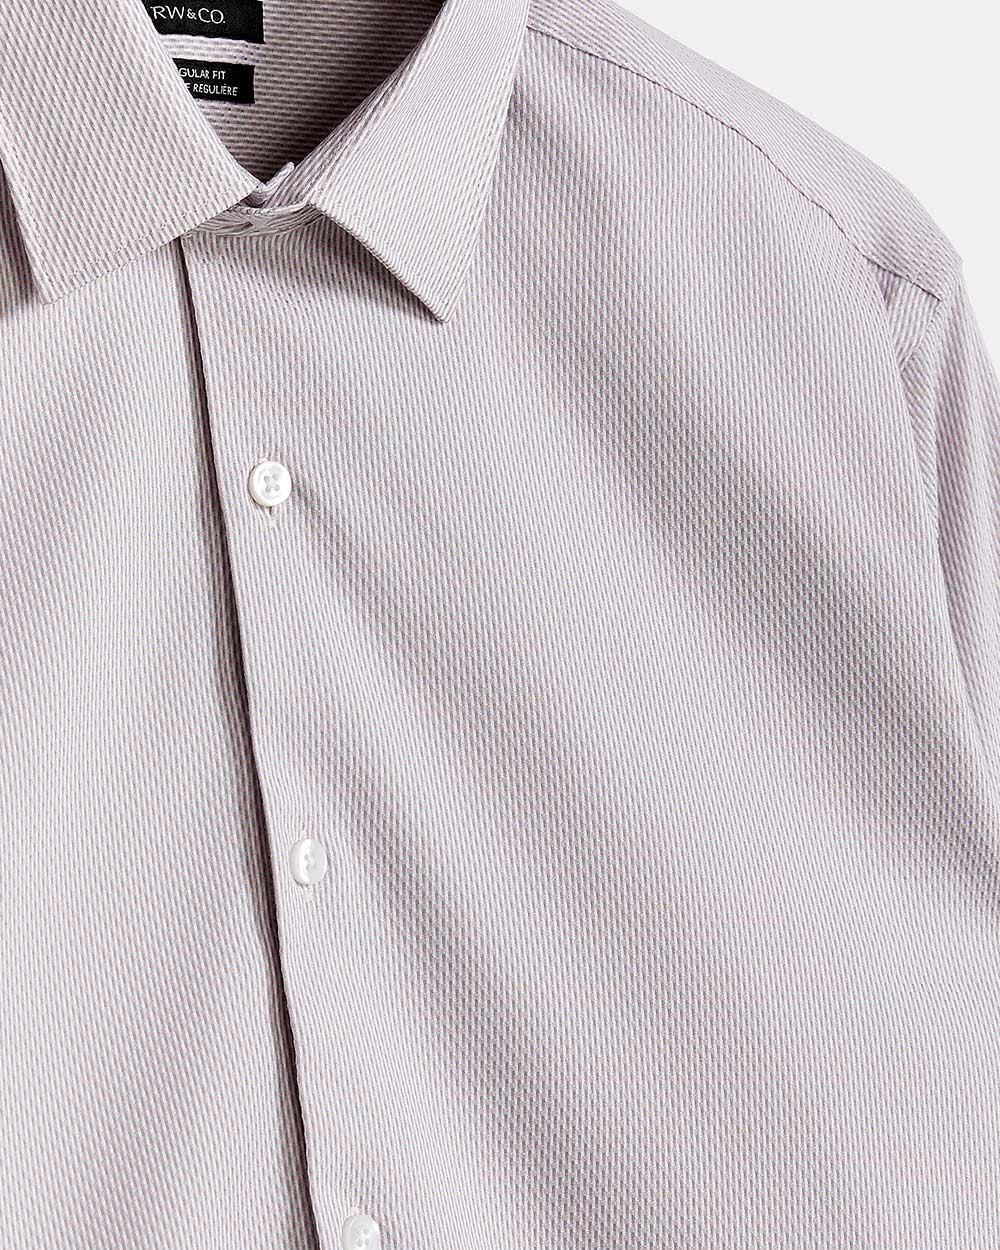 Regular Solid Textured Dress Shirt | RW&CO.